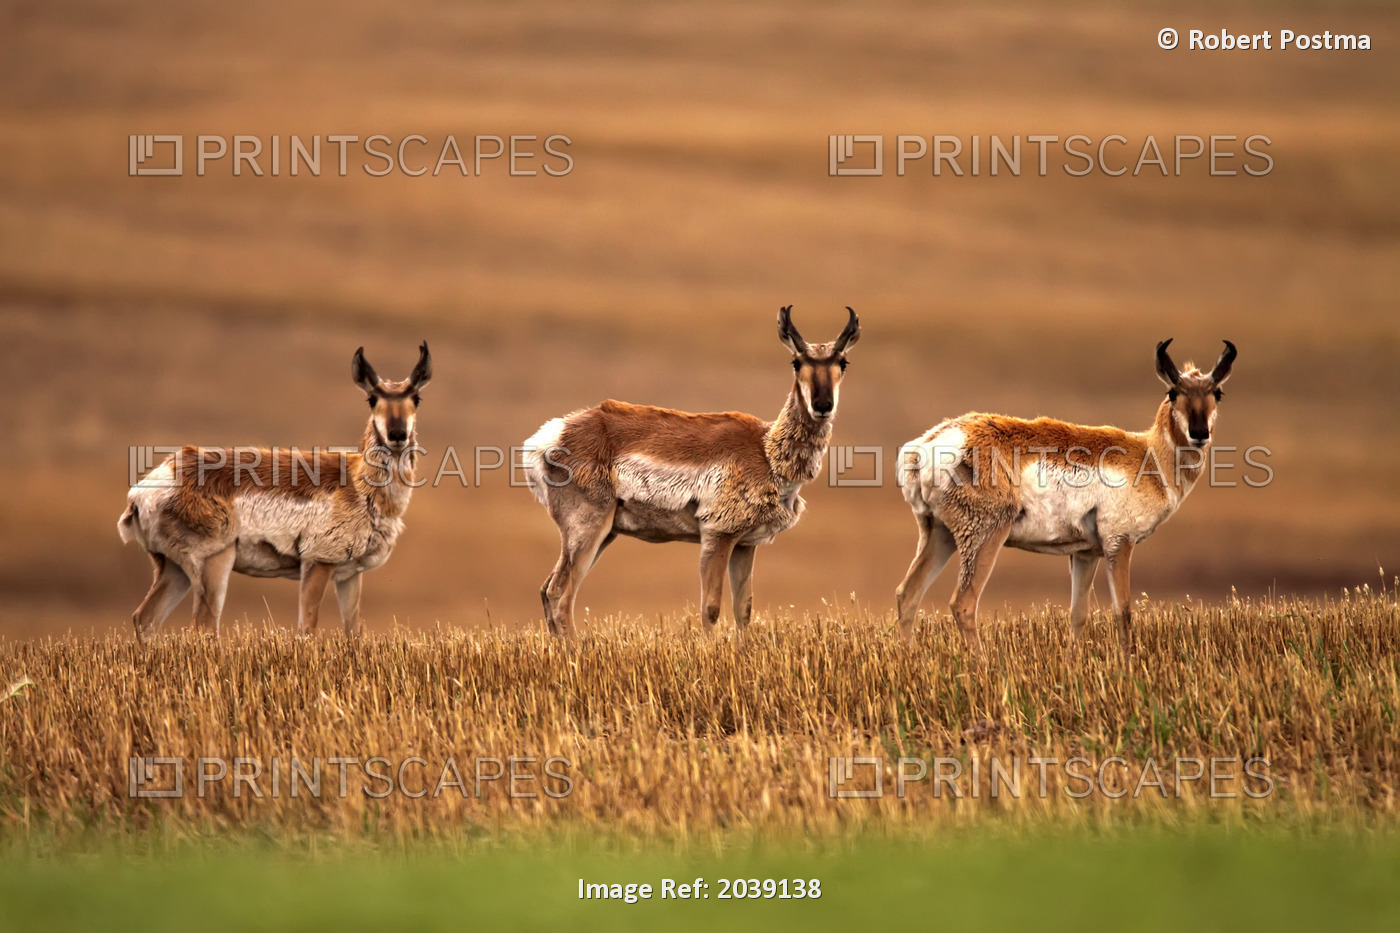 Pronghorn Antelope In A Cultivated Farmers Field, Saskatchewan